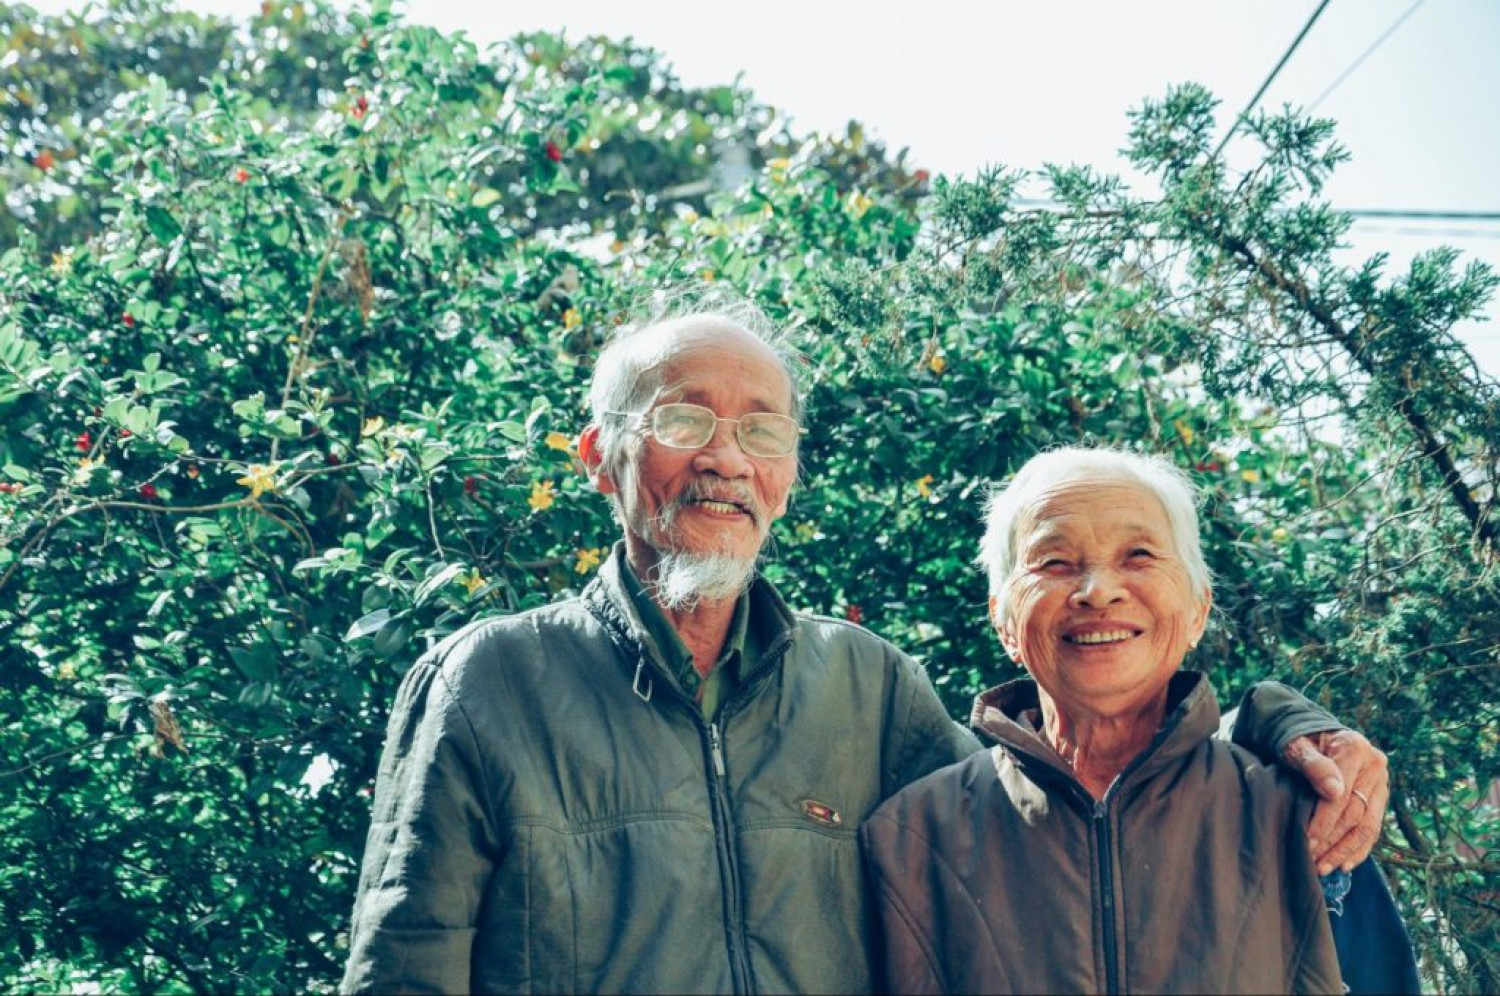 Elderly couple walking in nature. Exercise for arthritis - Focus Care